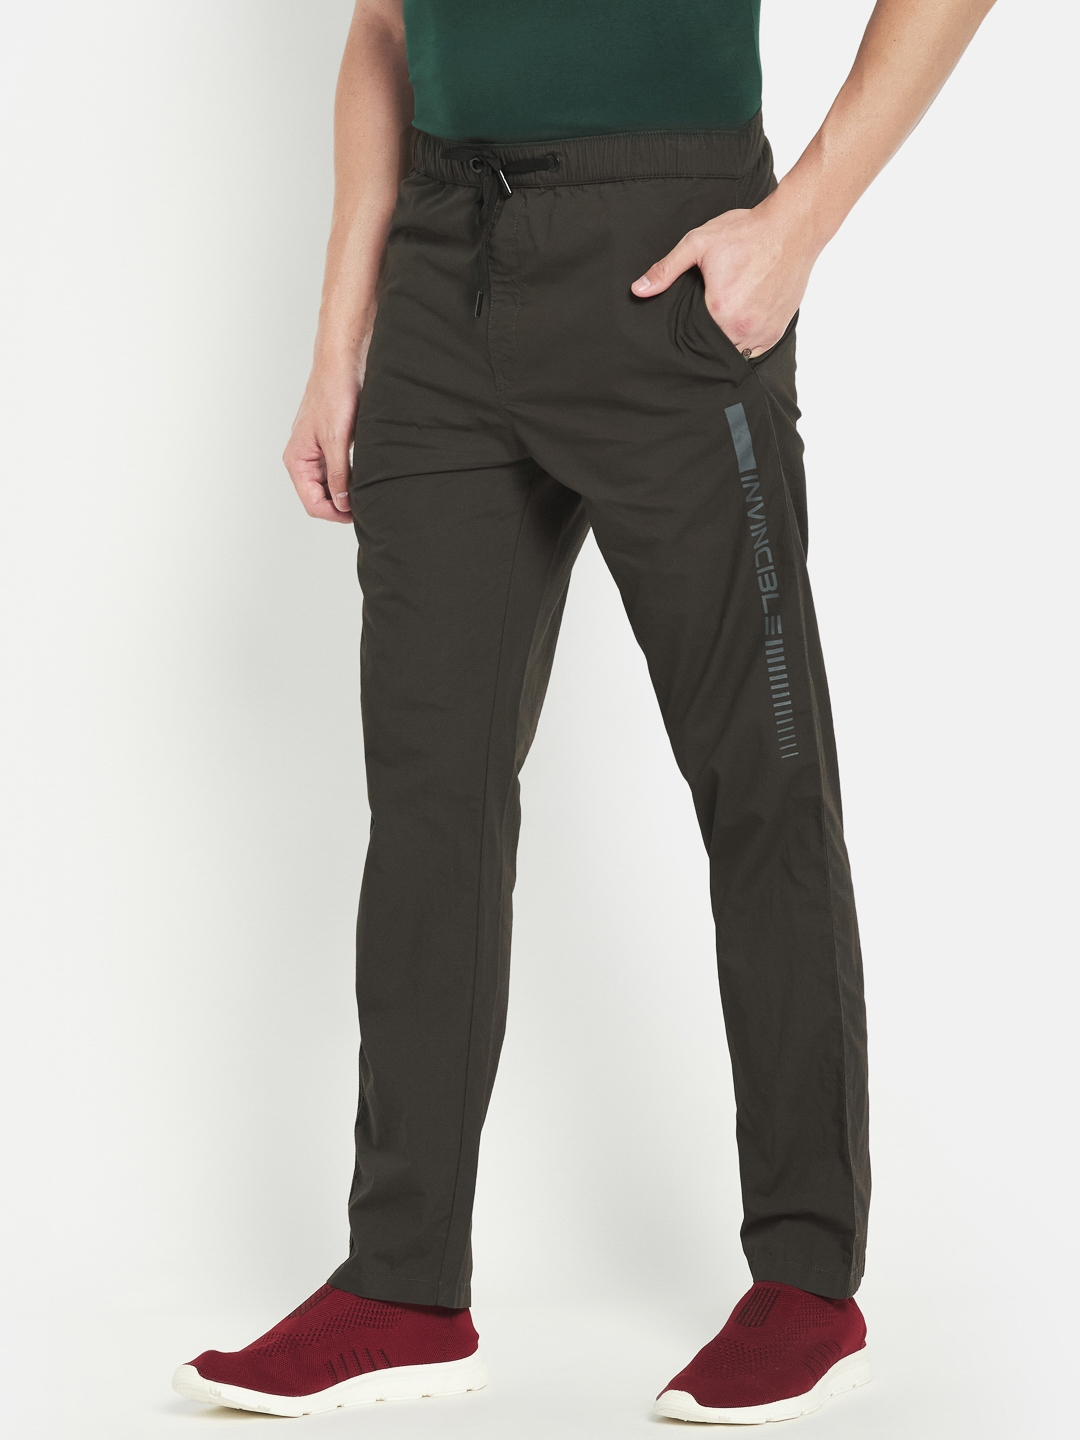 New Sweatpants Men Multi-Pockets Drawstring Cotton Casual Track Pant Male  Loose | eBay